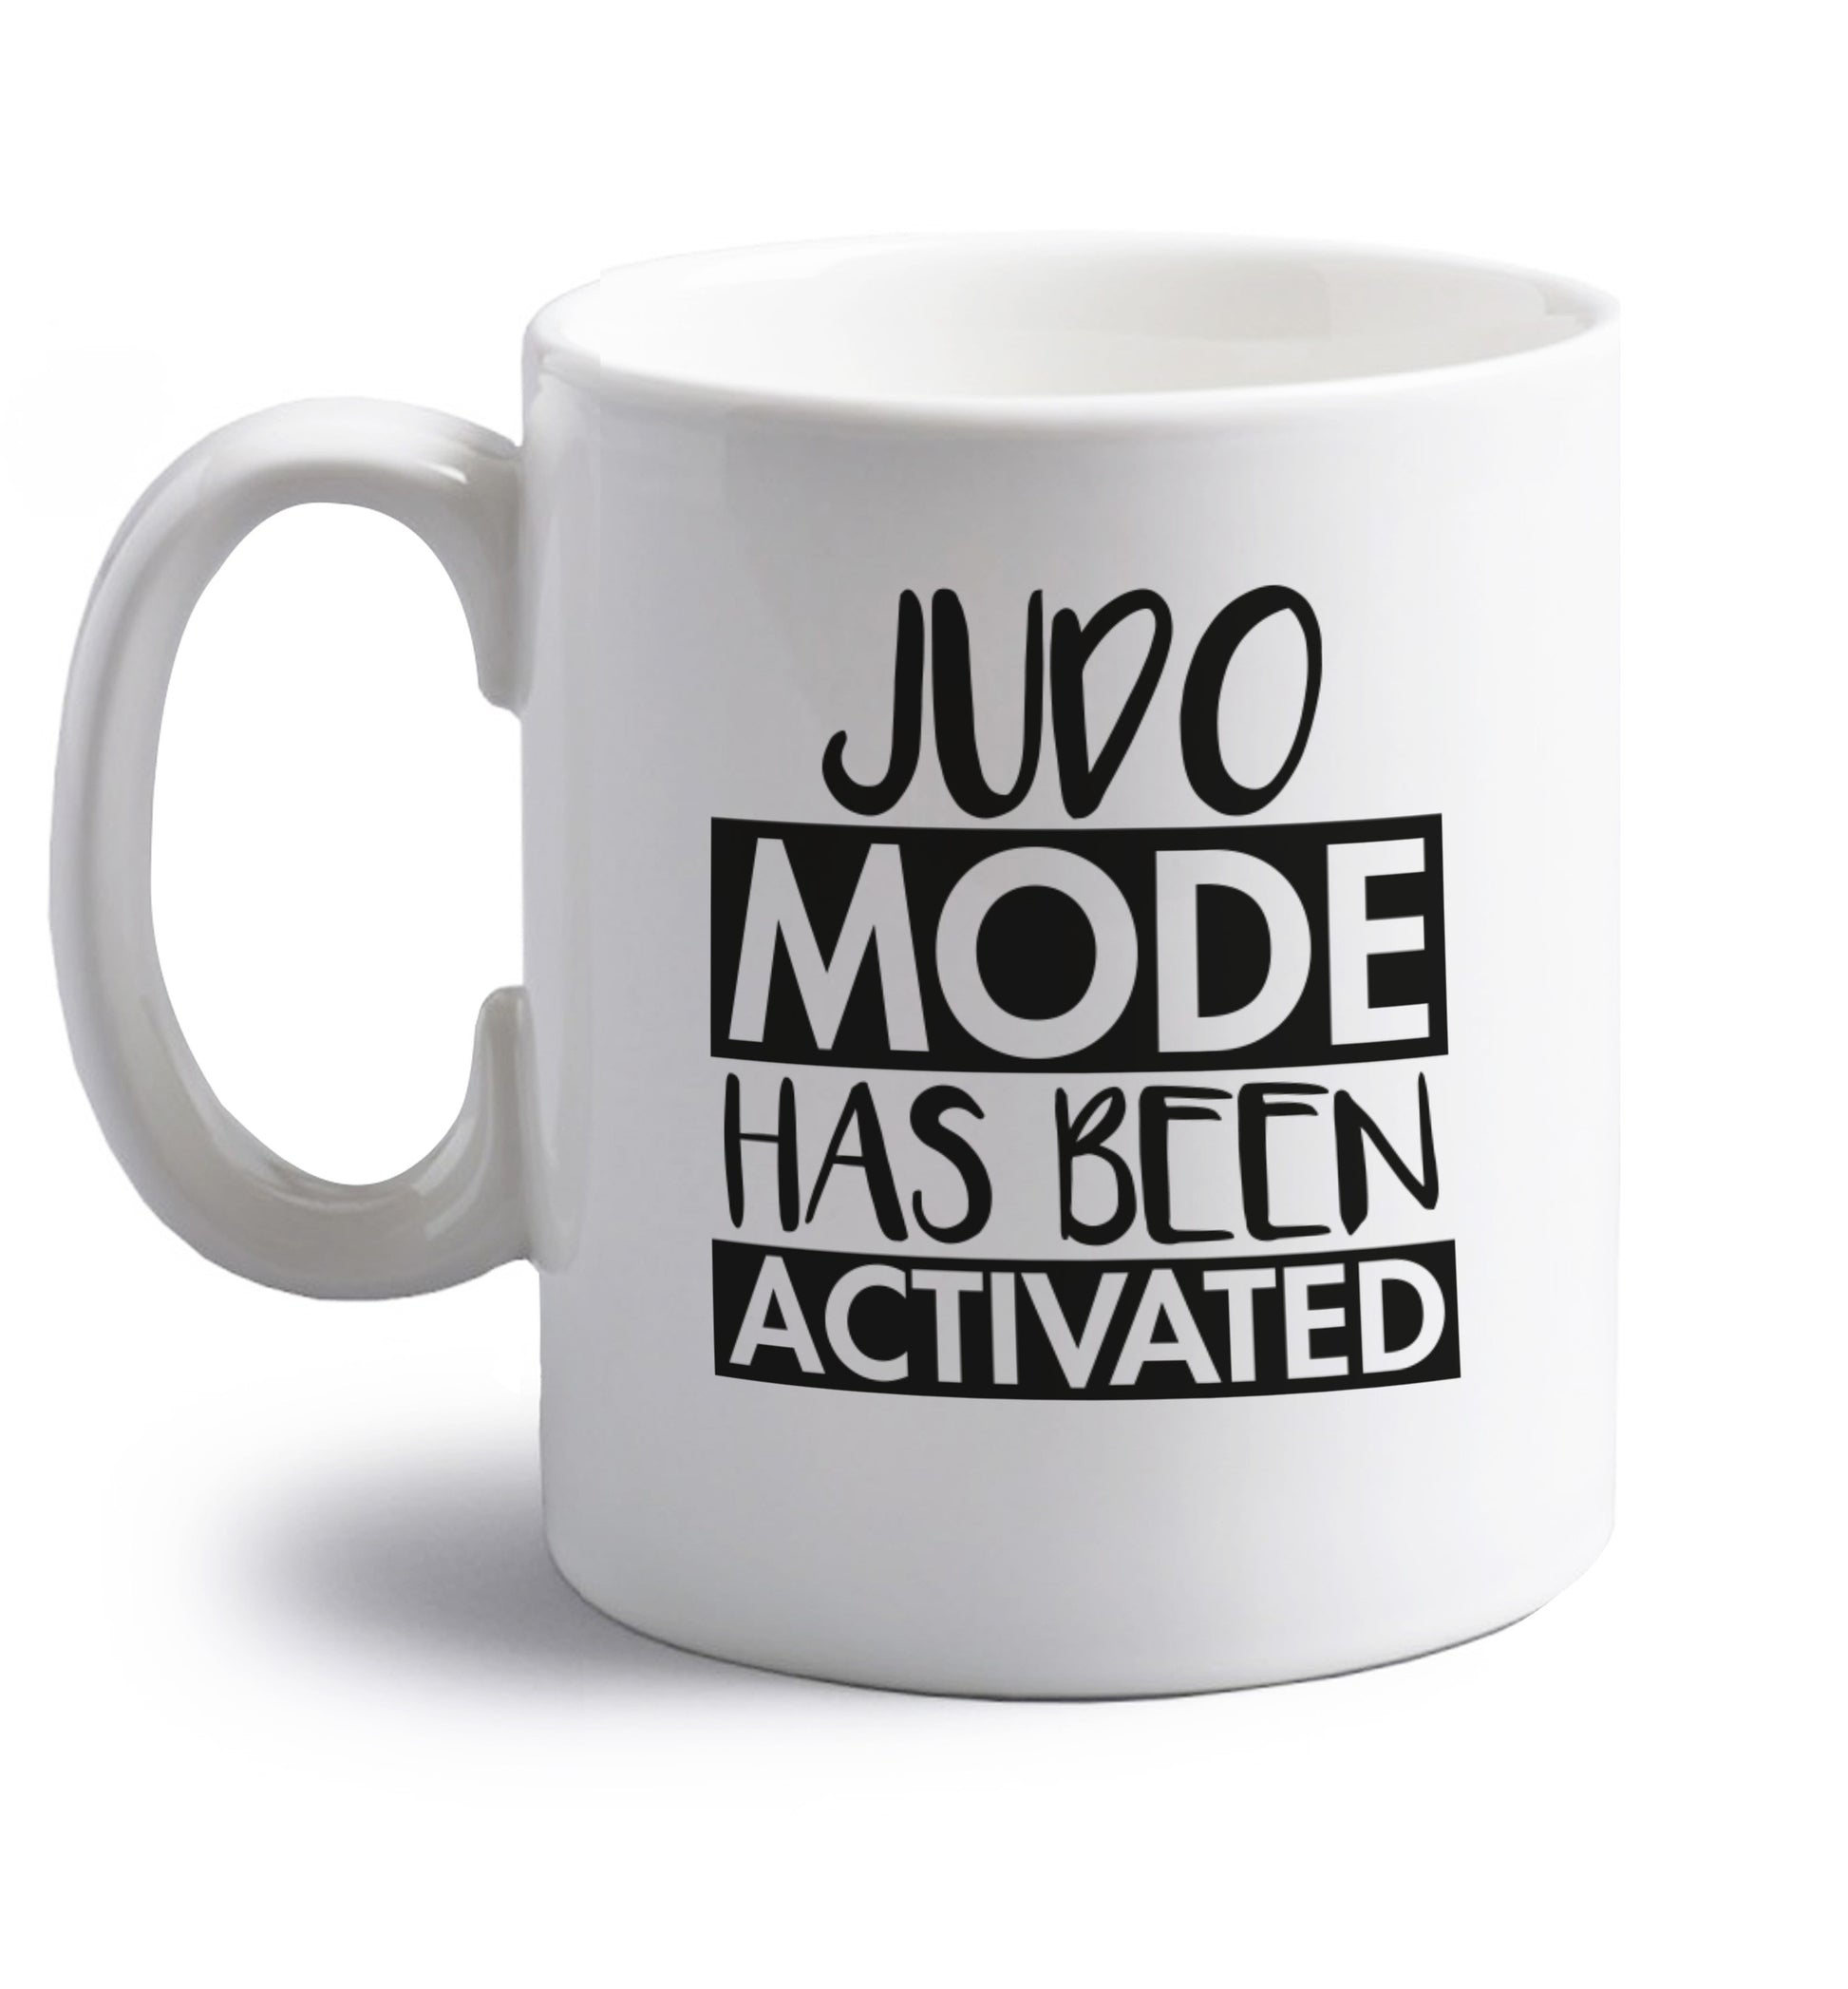 Judo mode activated right handed white ceramic mug 